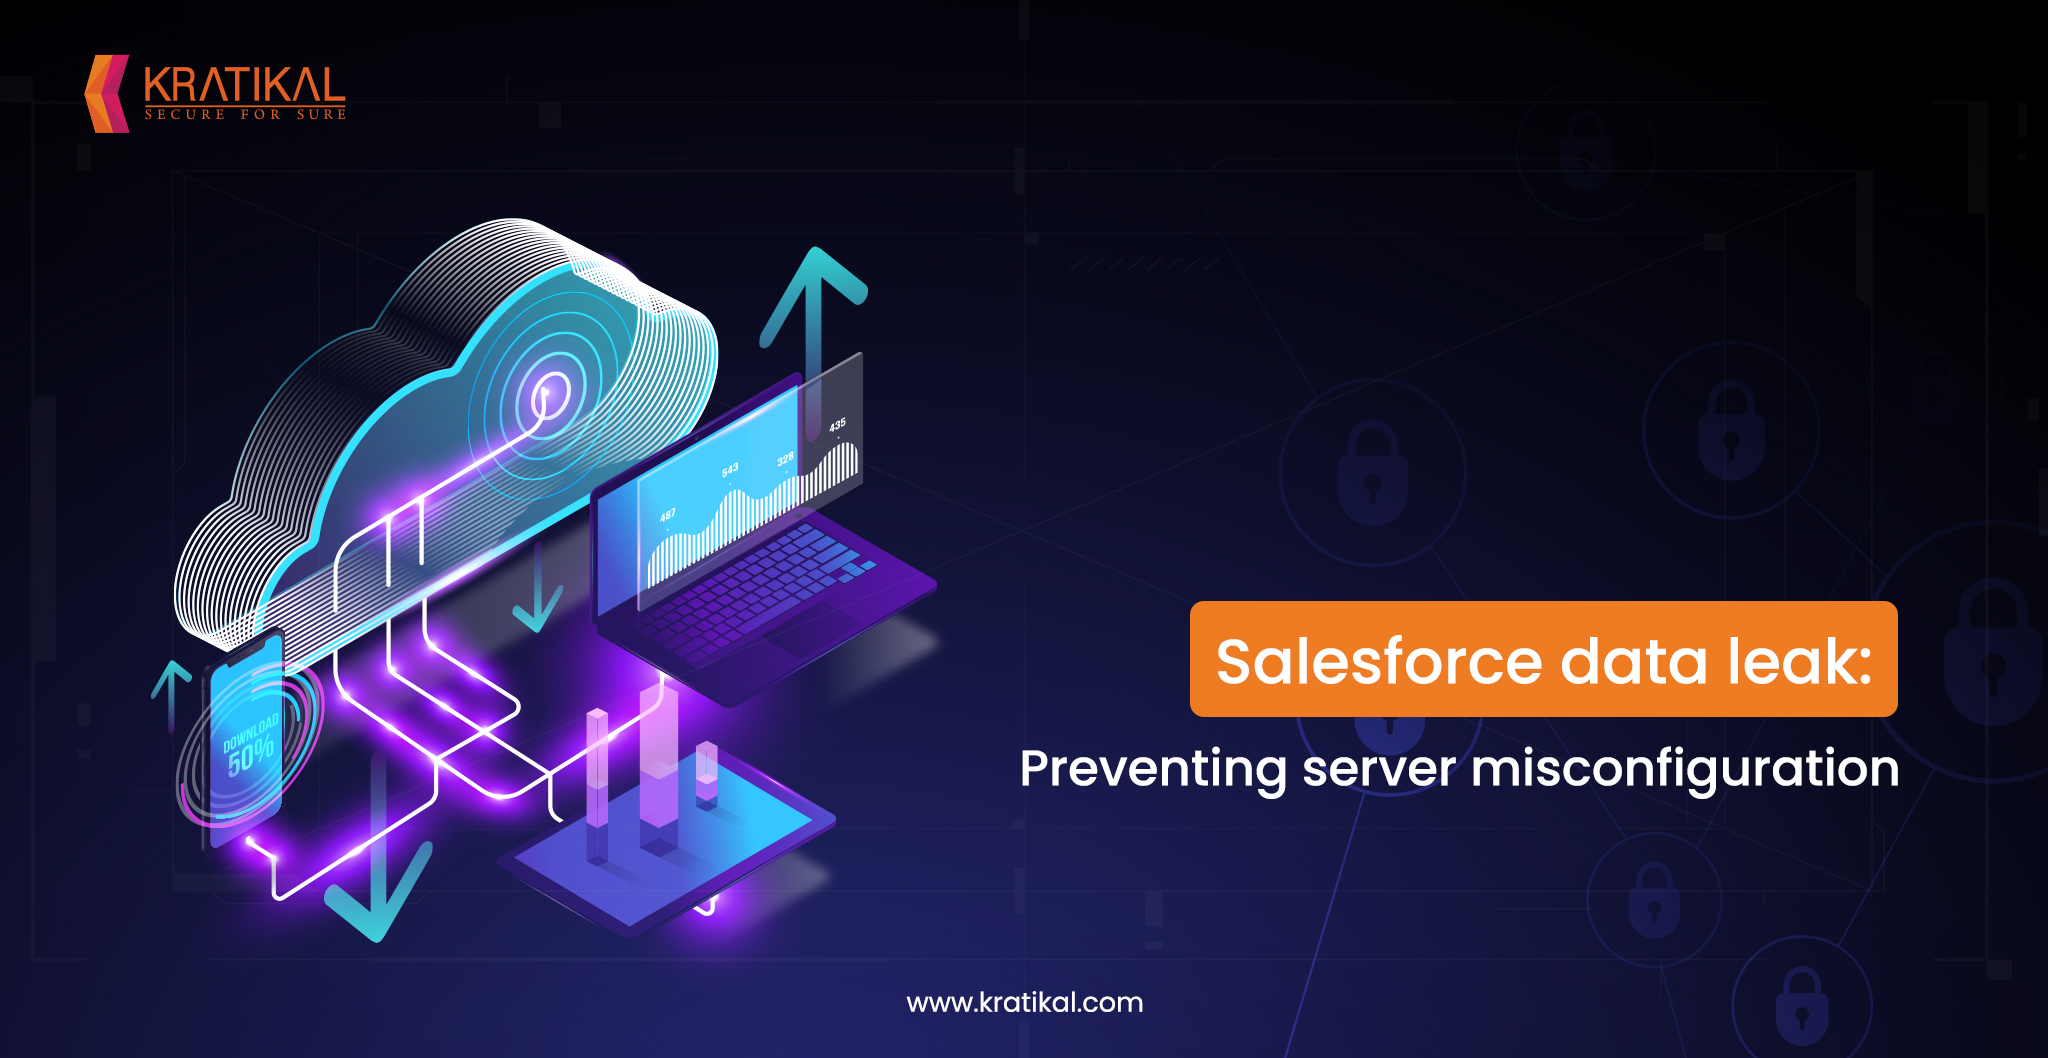 "Salesforce Data Leak: Preventing Server Misconfiguration "